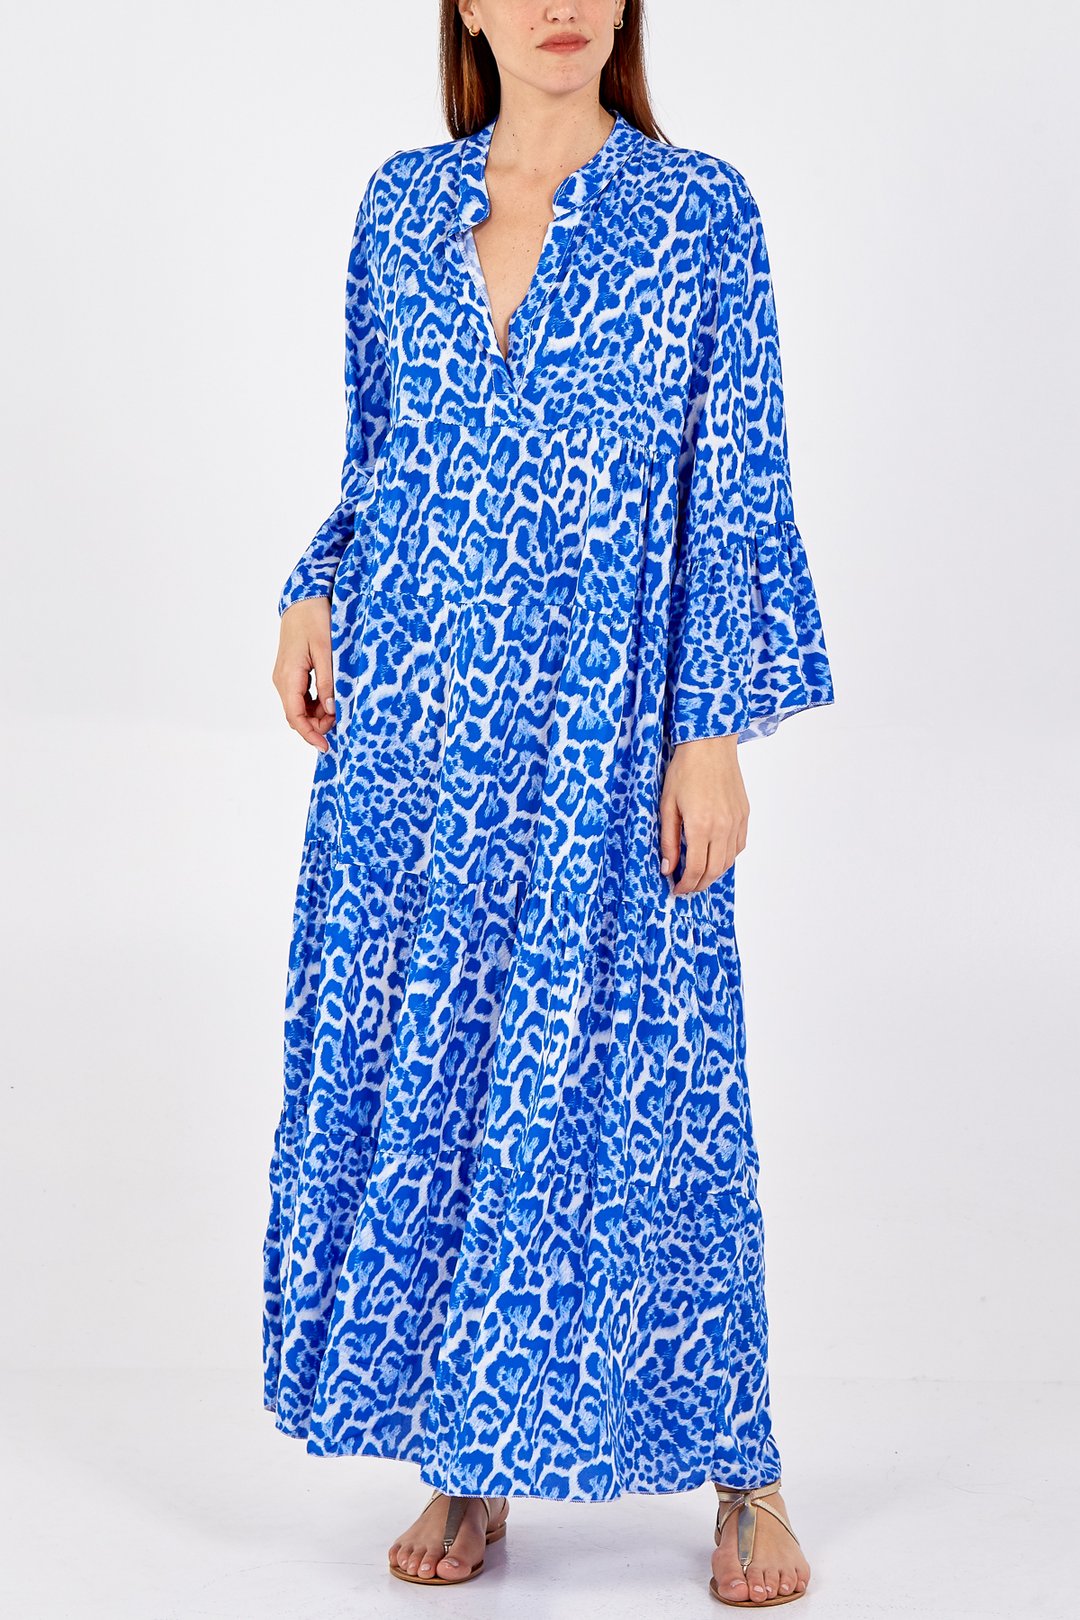 LACEY - Cascade Maxi Tiered Summer Dress - Italian Made